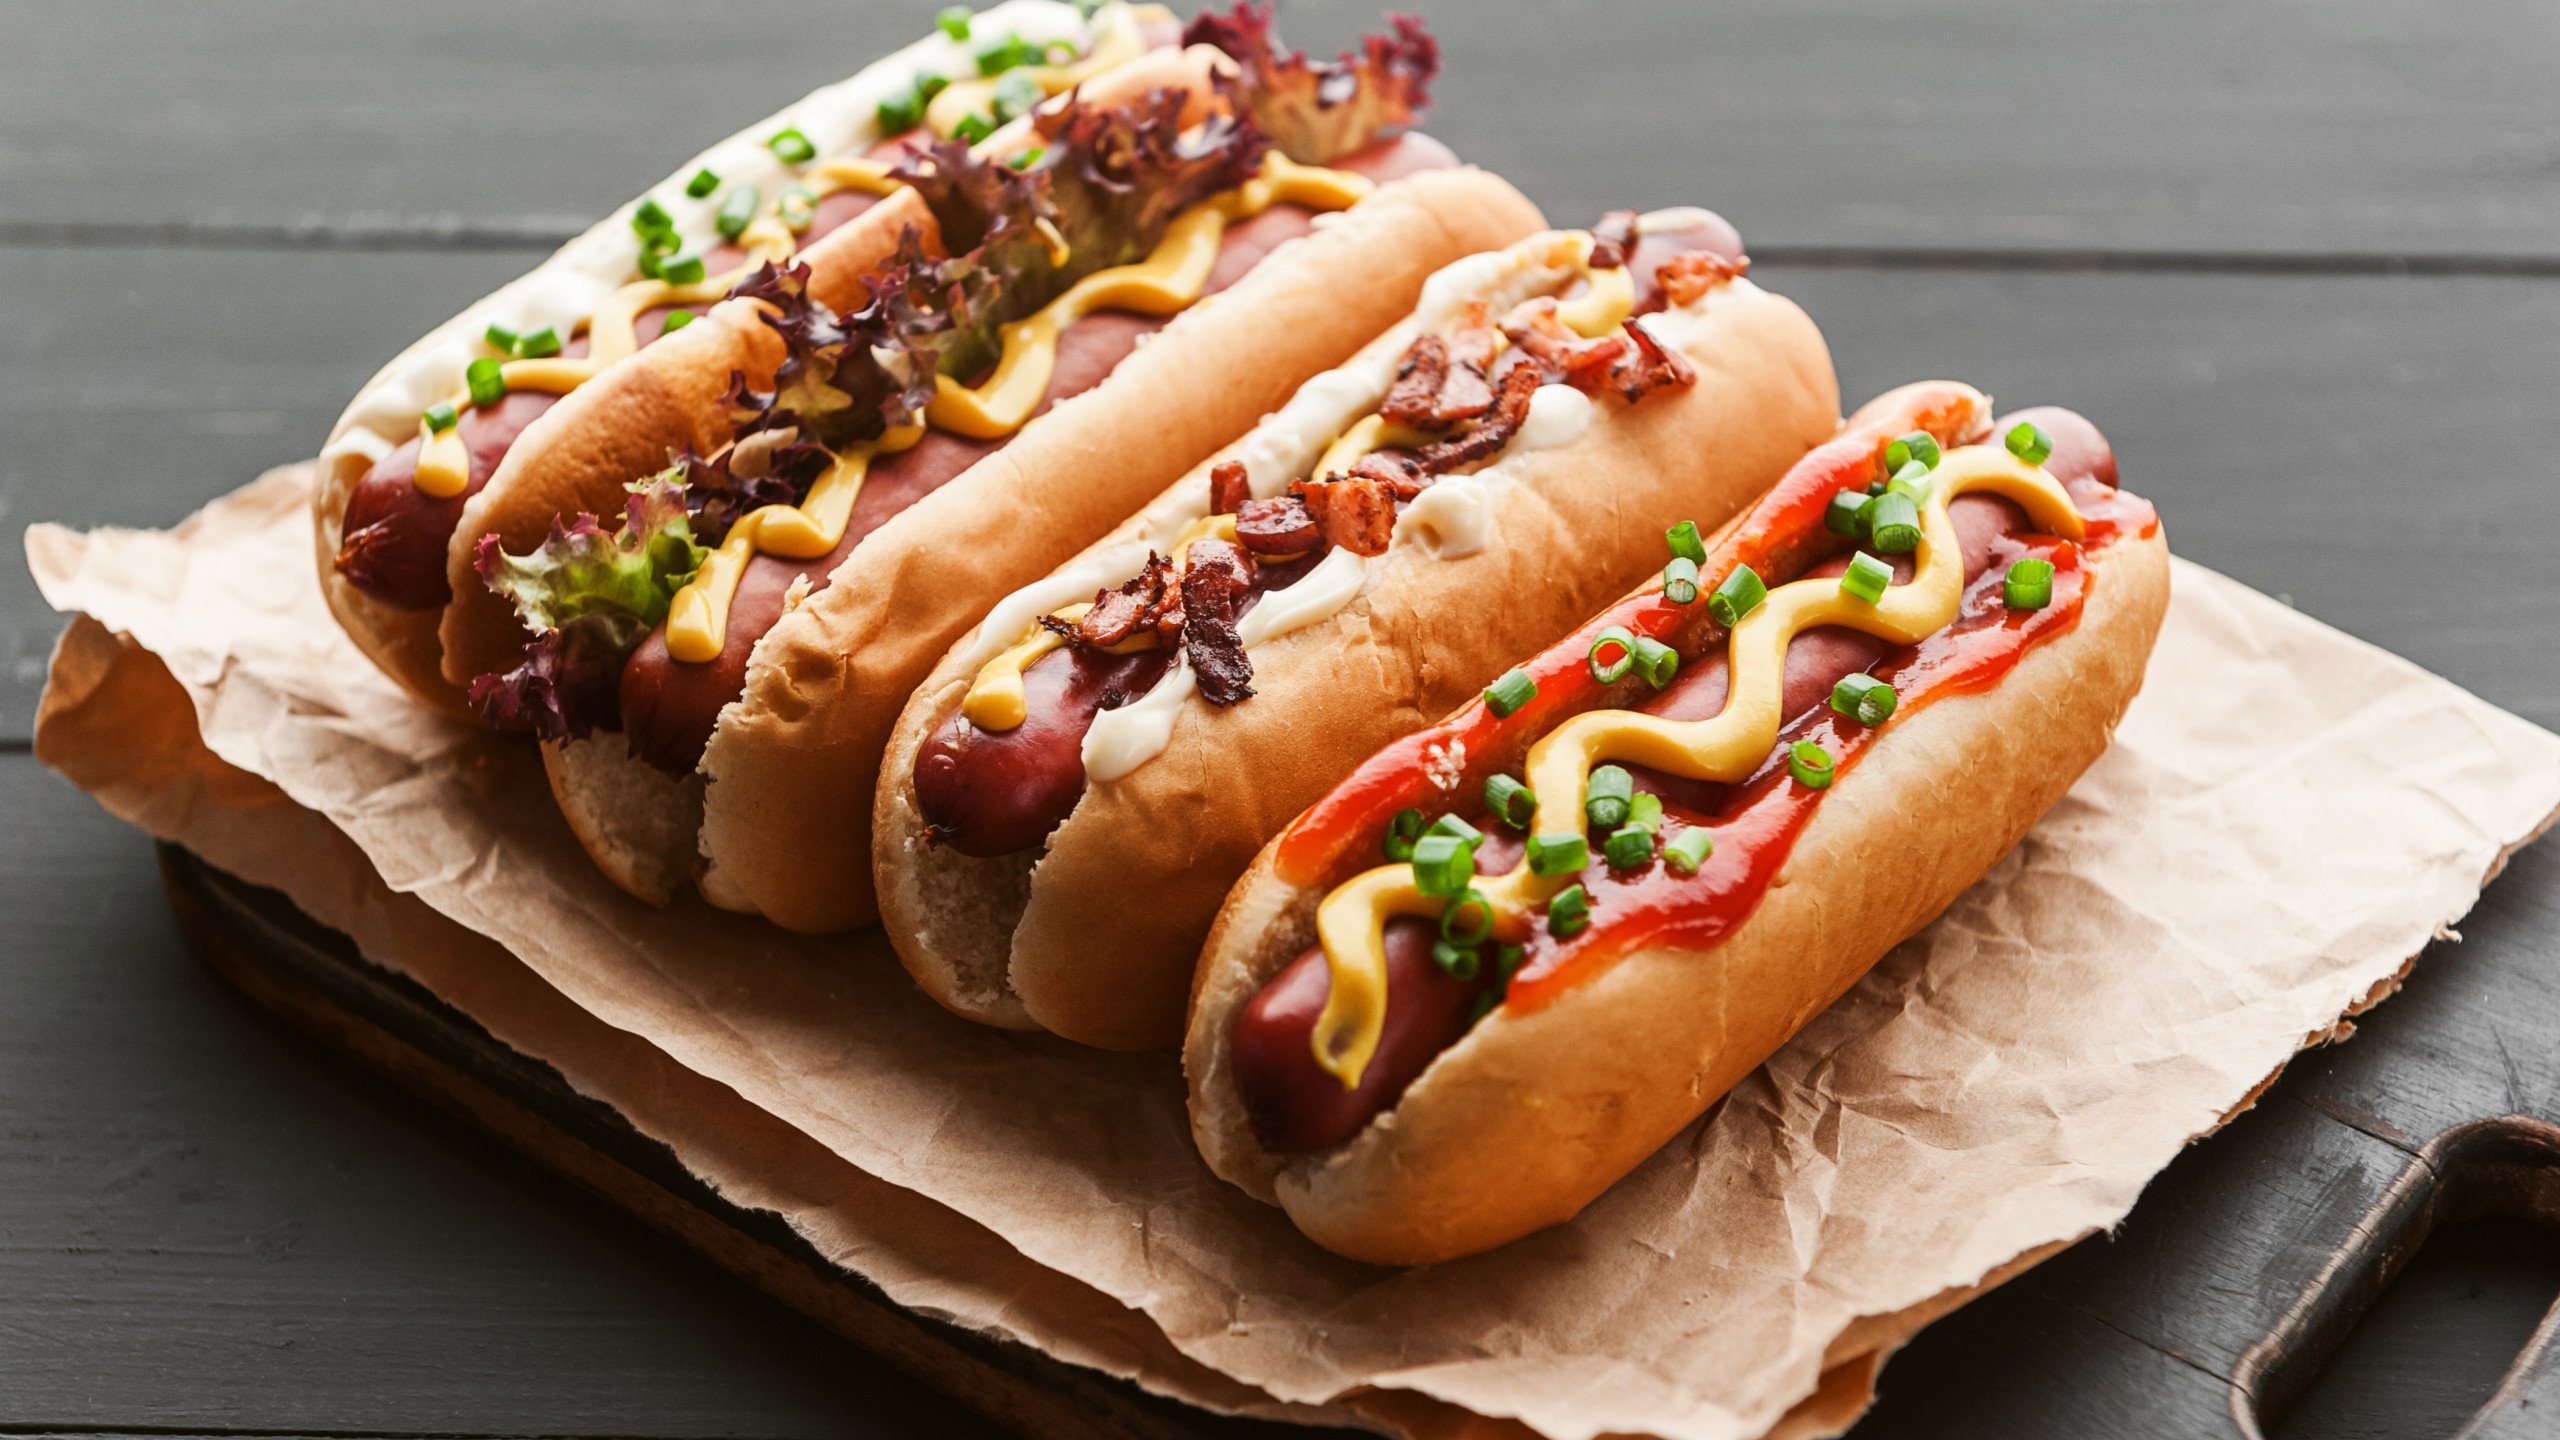 Hot dog wallpaper, High-quality image, Food photography, Appetizing, 2560x1440 HD Desktop